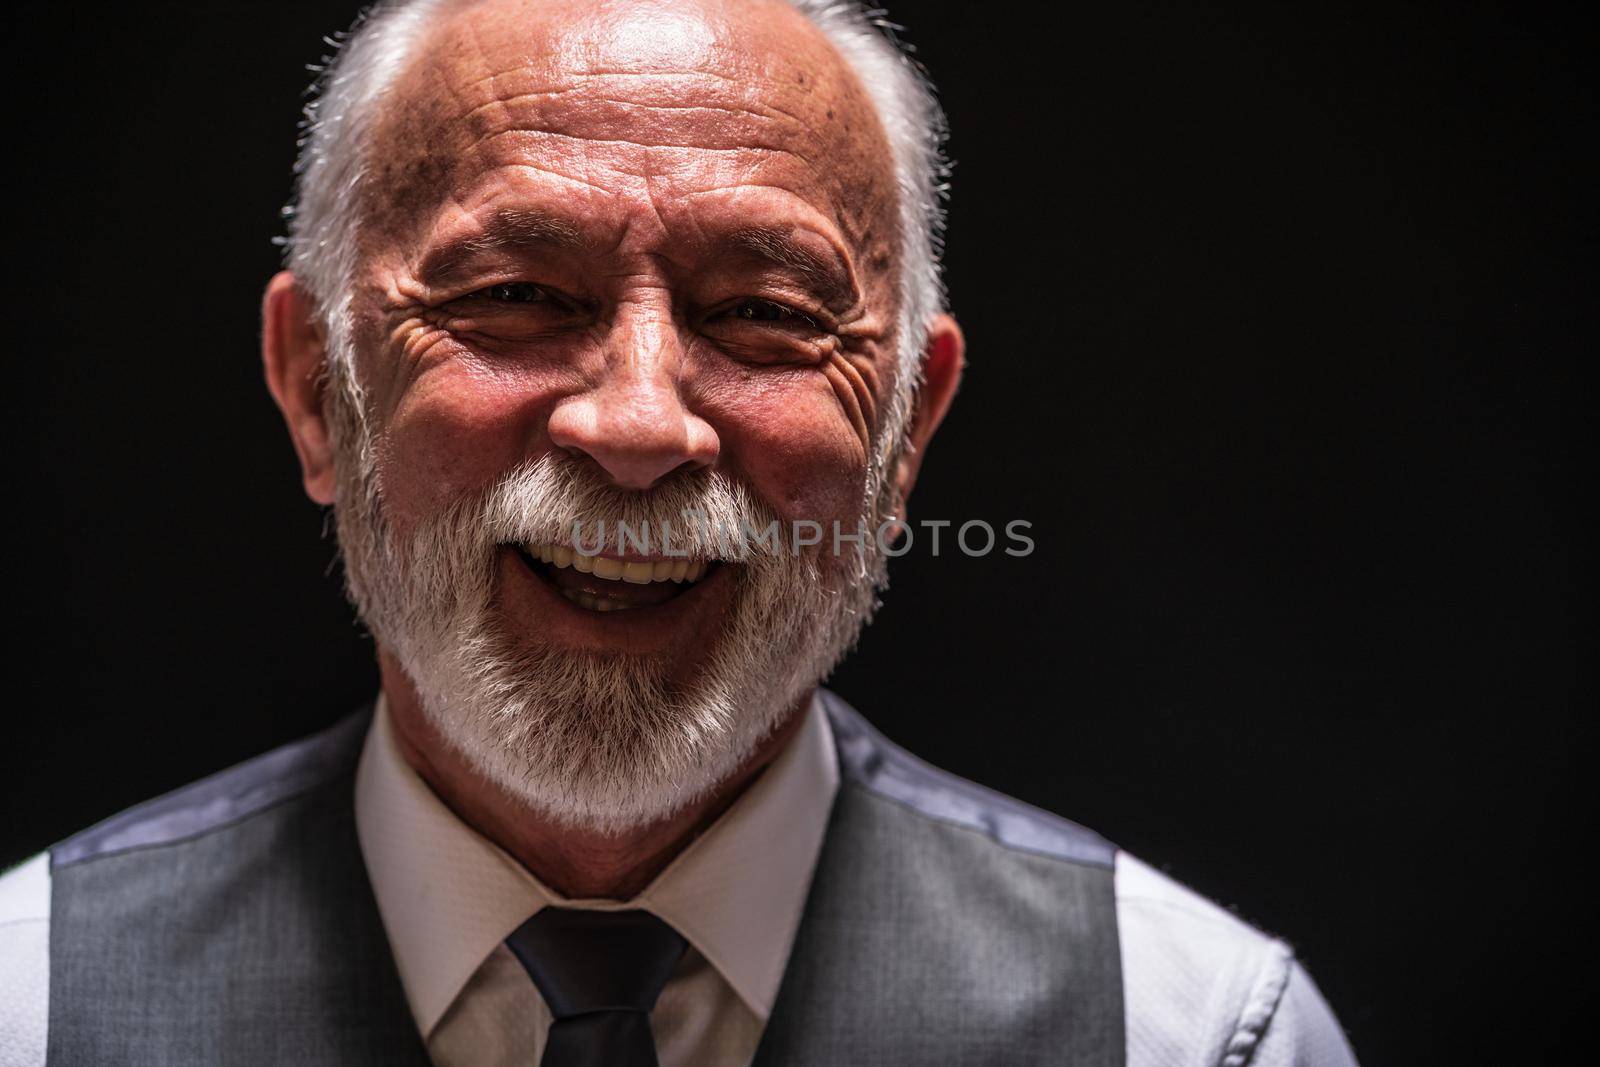 Portrait of cheerful senior man on black background.